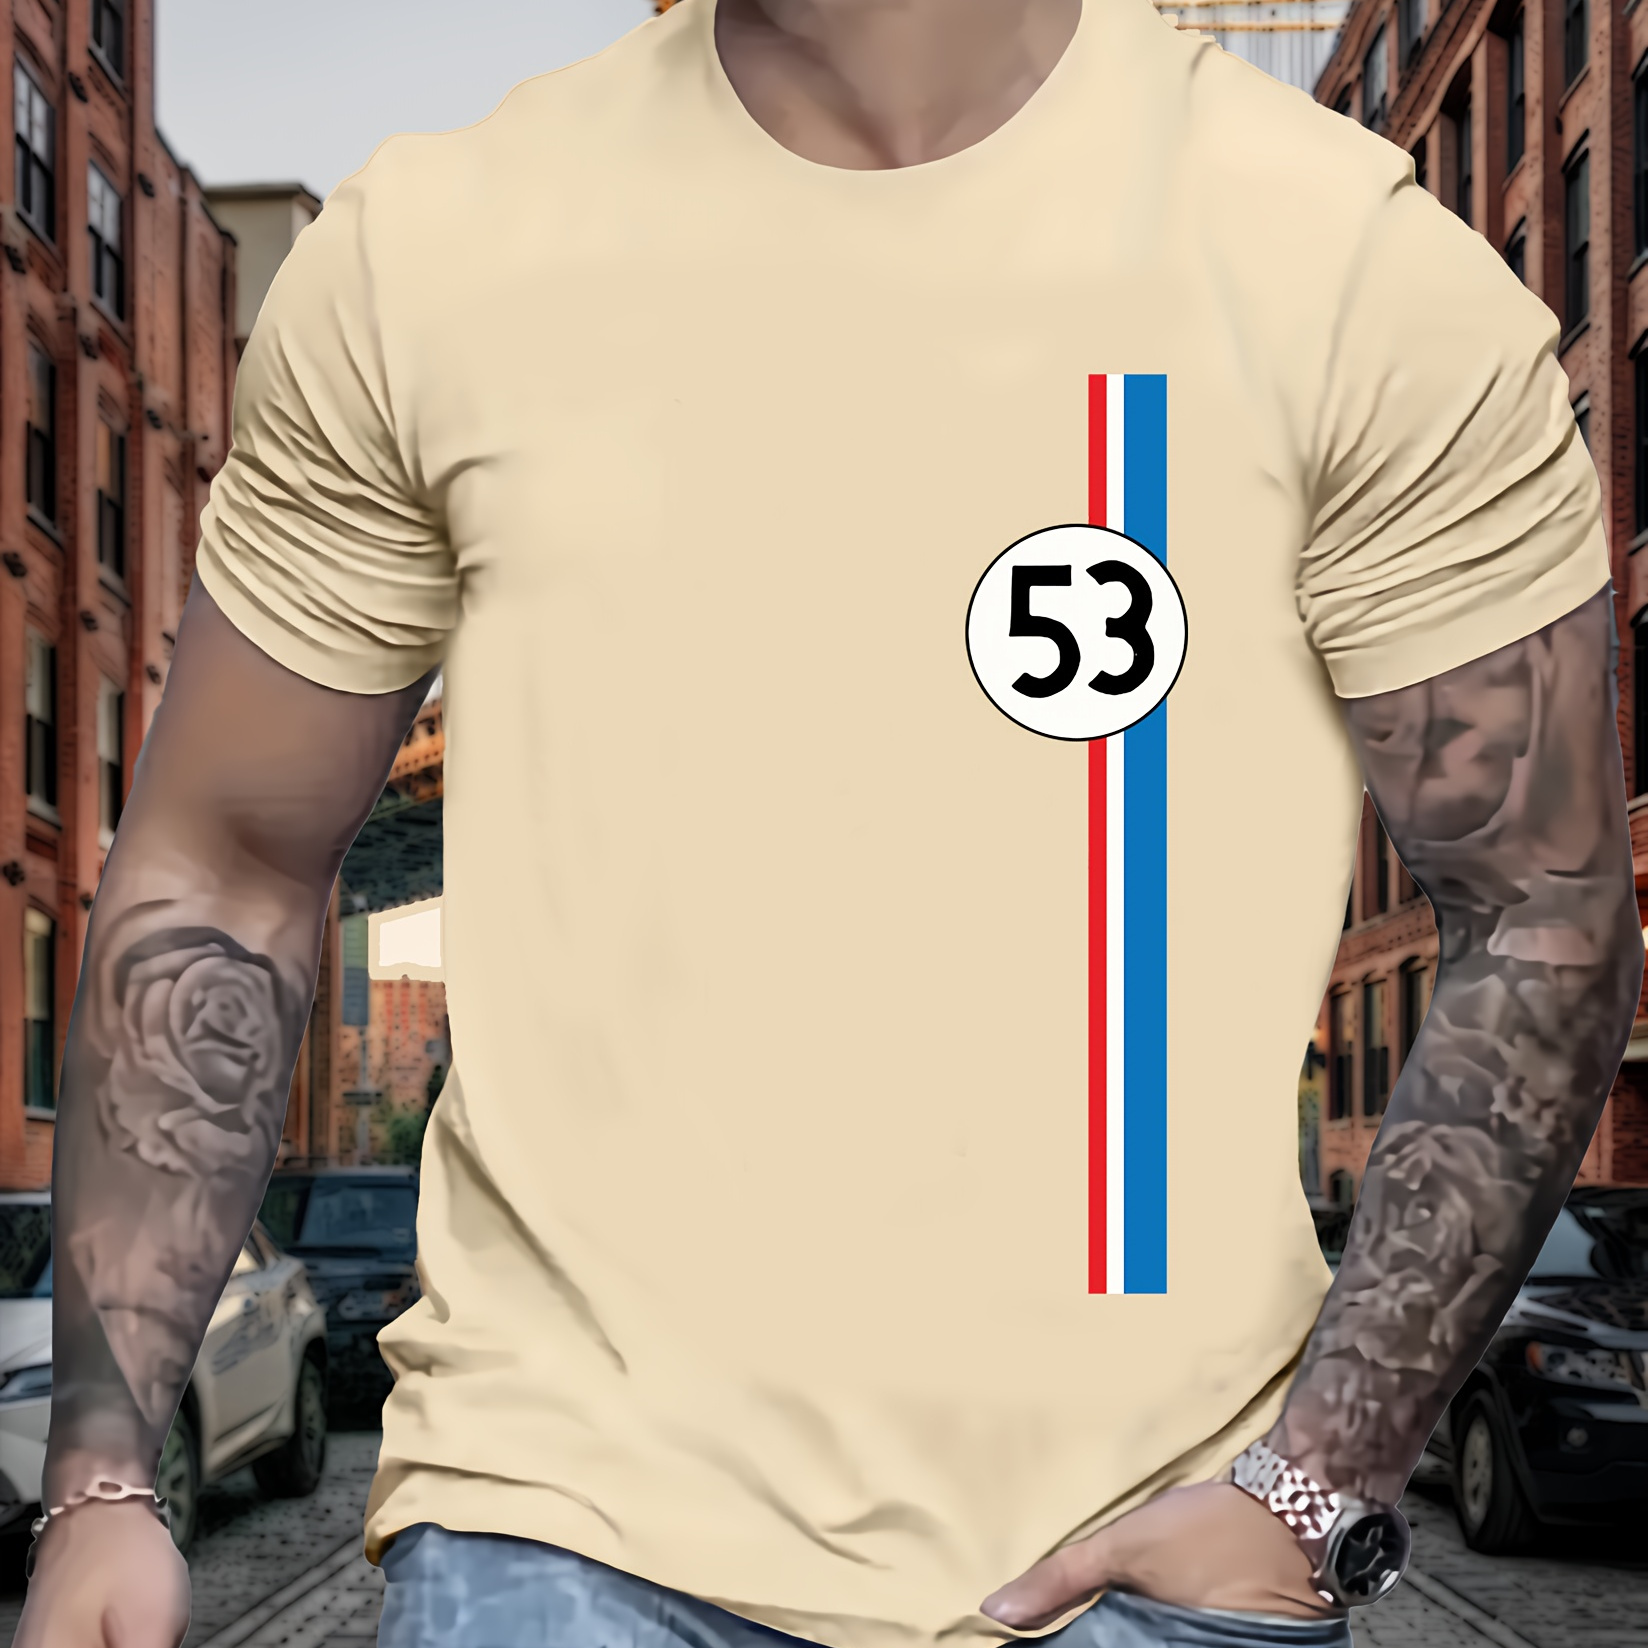 

Men's No. 53 Retro Car Graphic Printed T-shirt, Men's Summer Casual Fashion Tops, Retro Nostalgic T-shirt, Men's Clothing.